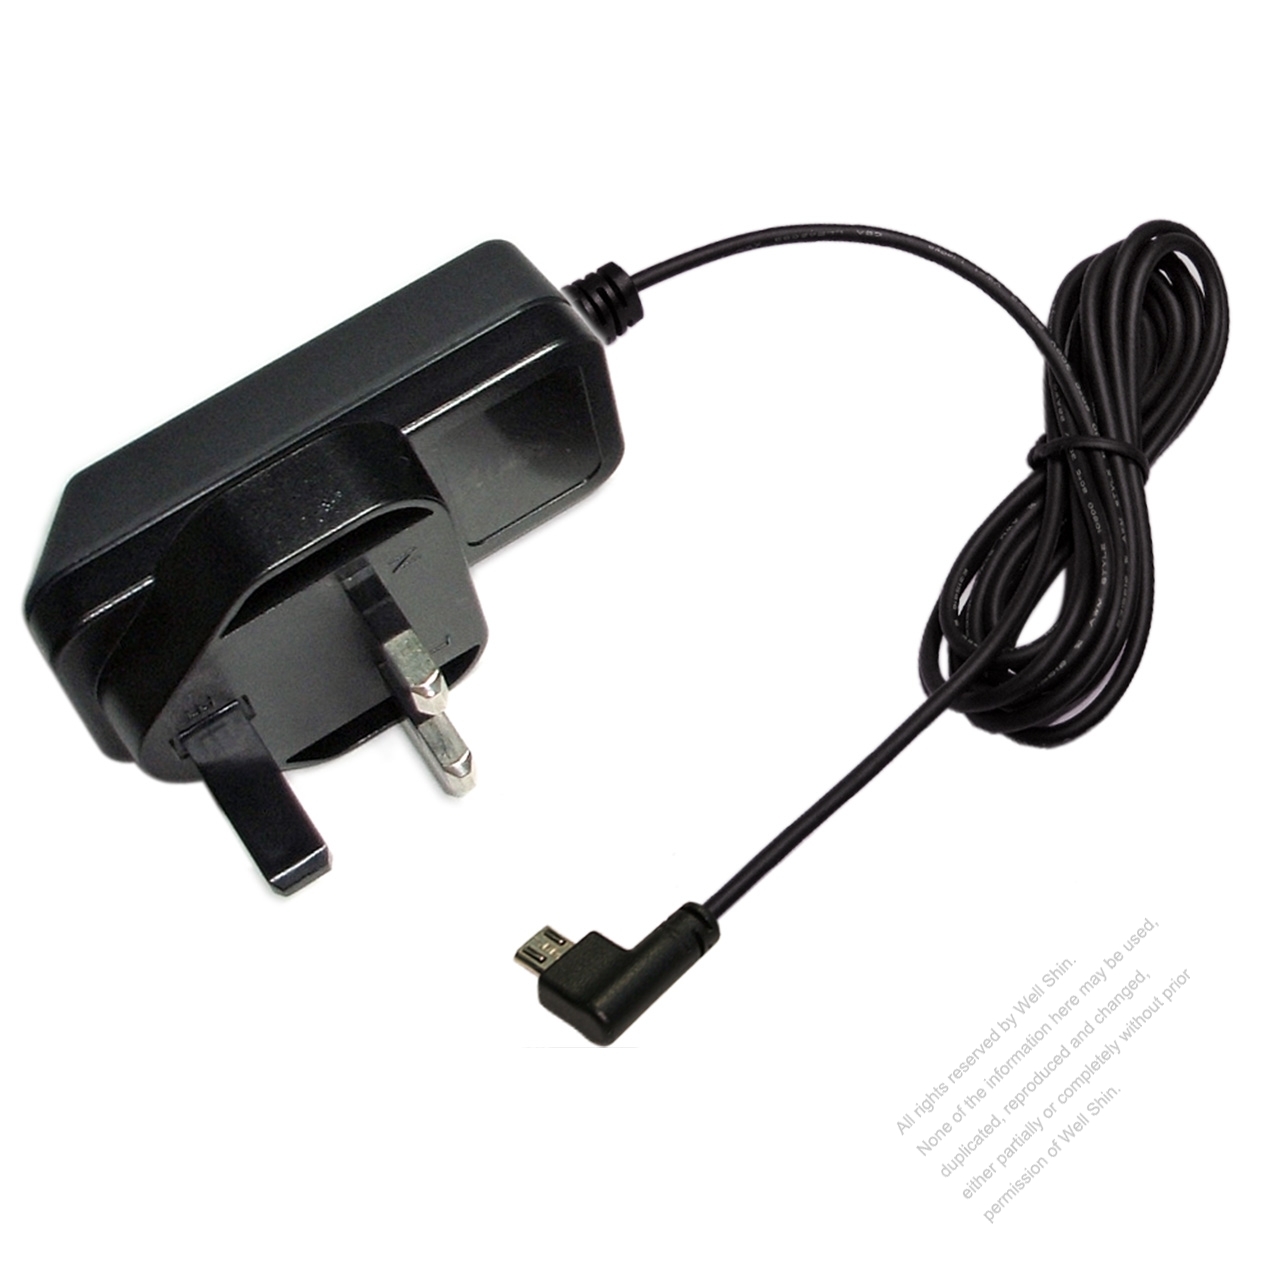 AC/DC 5V 1A Adapter, UK 3 Pin Plug to Micro USB Elbow Plug with optional  cord - Well Shin Technology Co., Ltd.